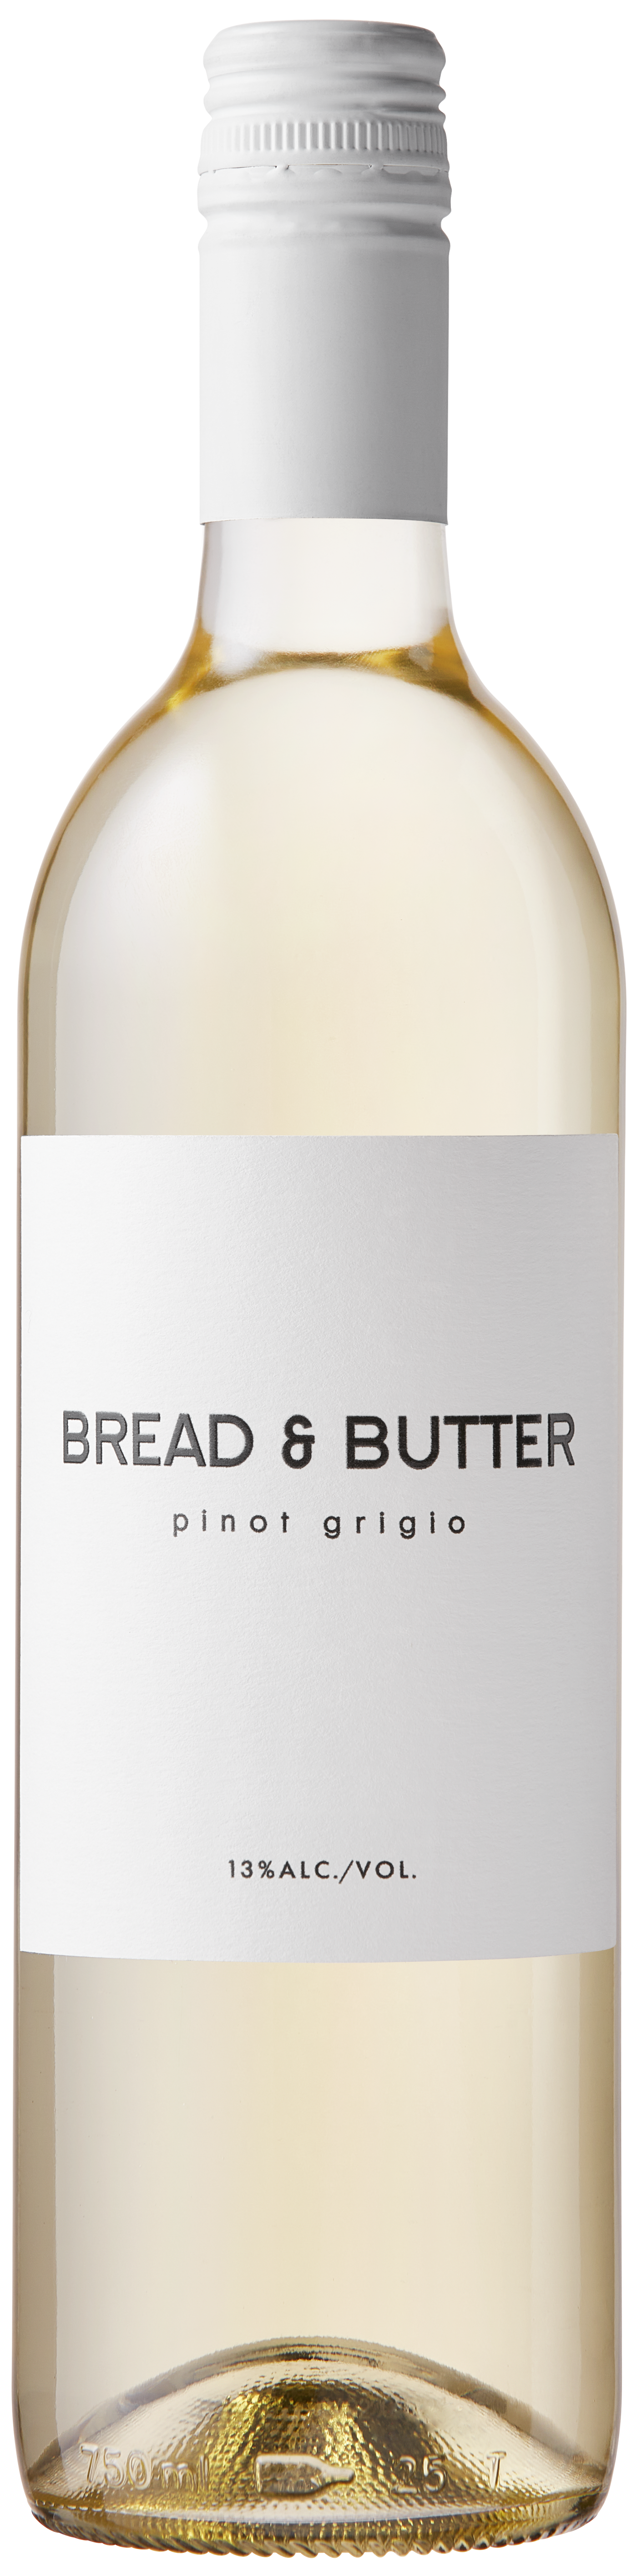 Bread & Butter Pinot Grigio-bk wine  depot corp 